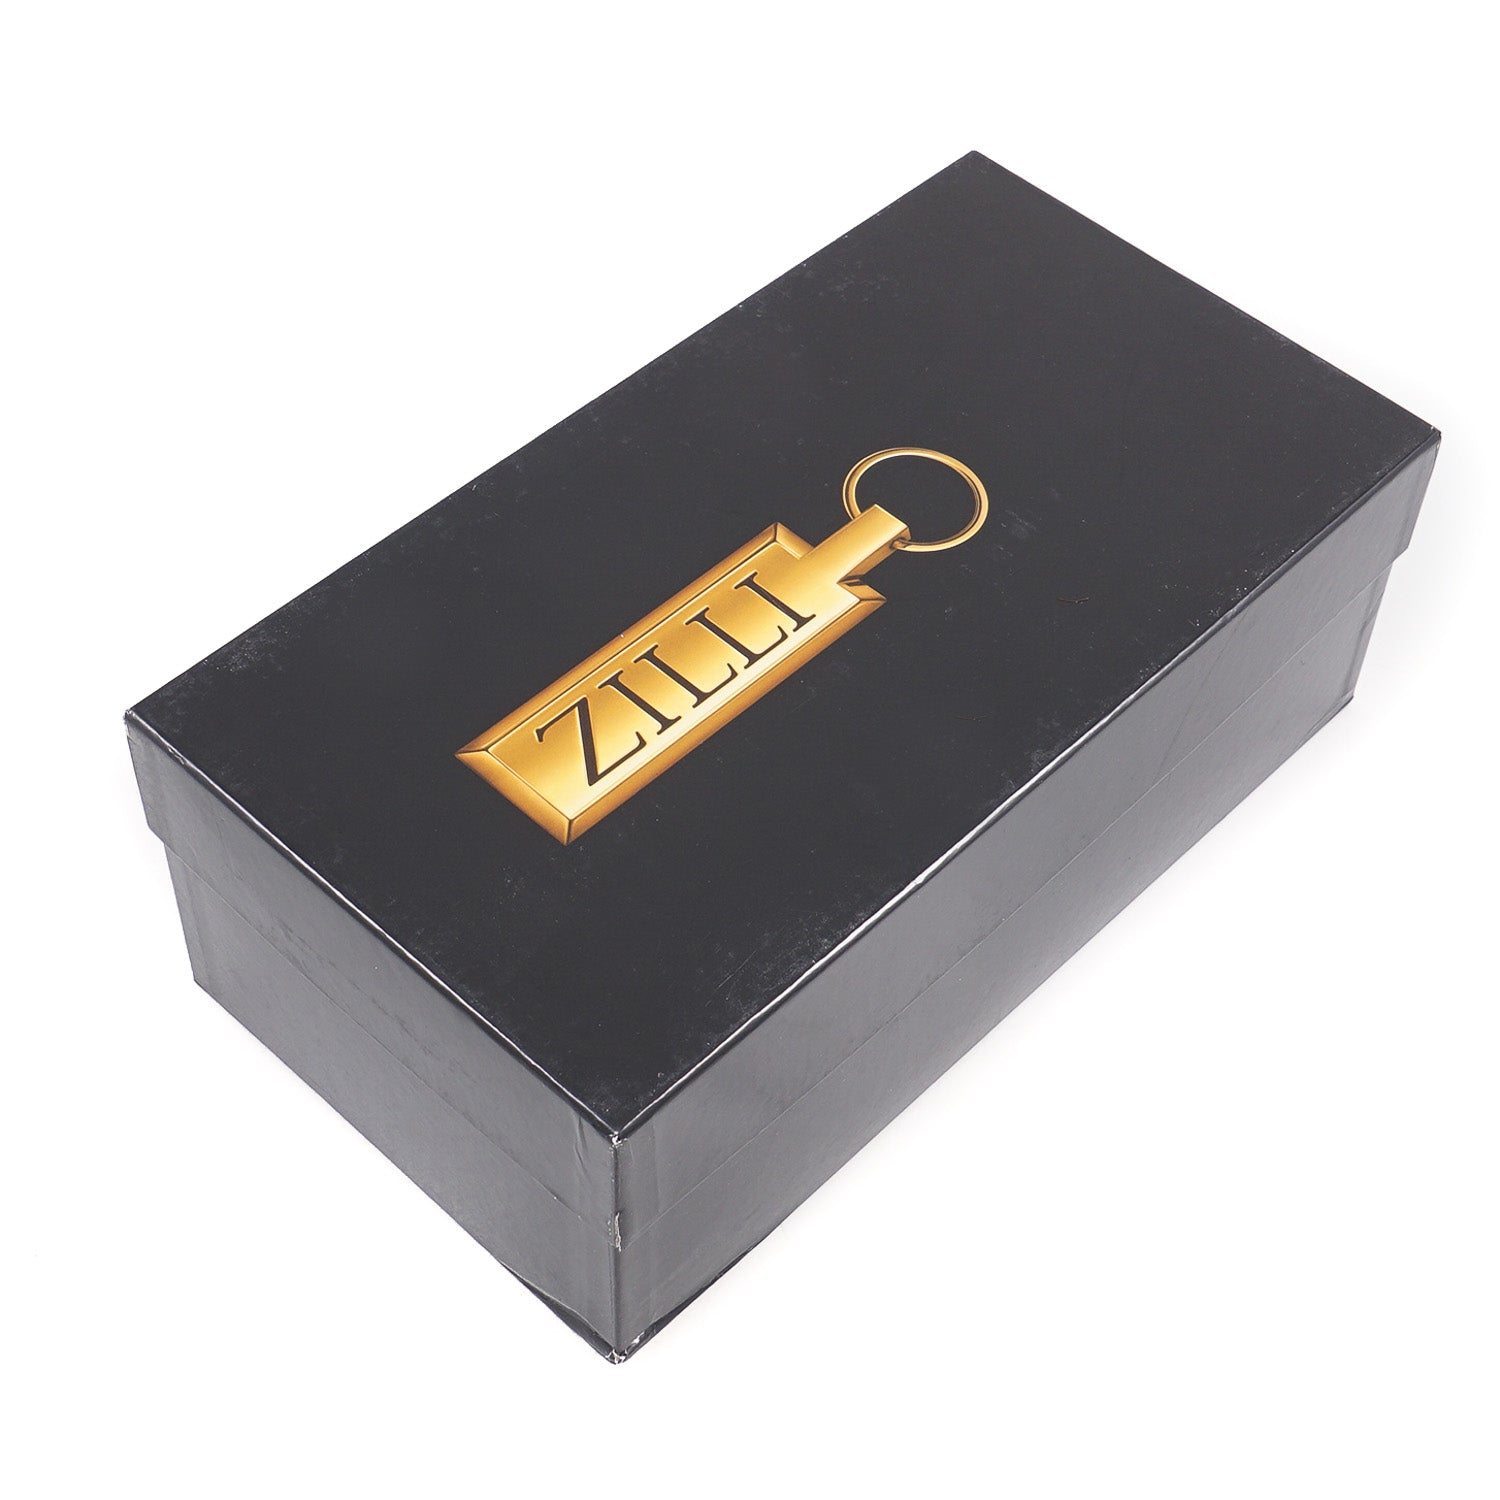 Zilli Tricolore Calf Leather Sneakers - Top Shelf Apparel